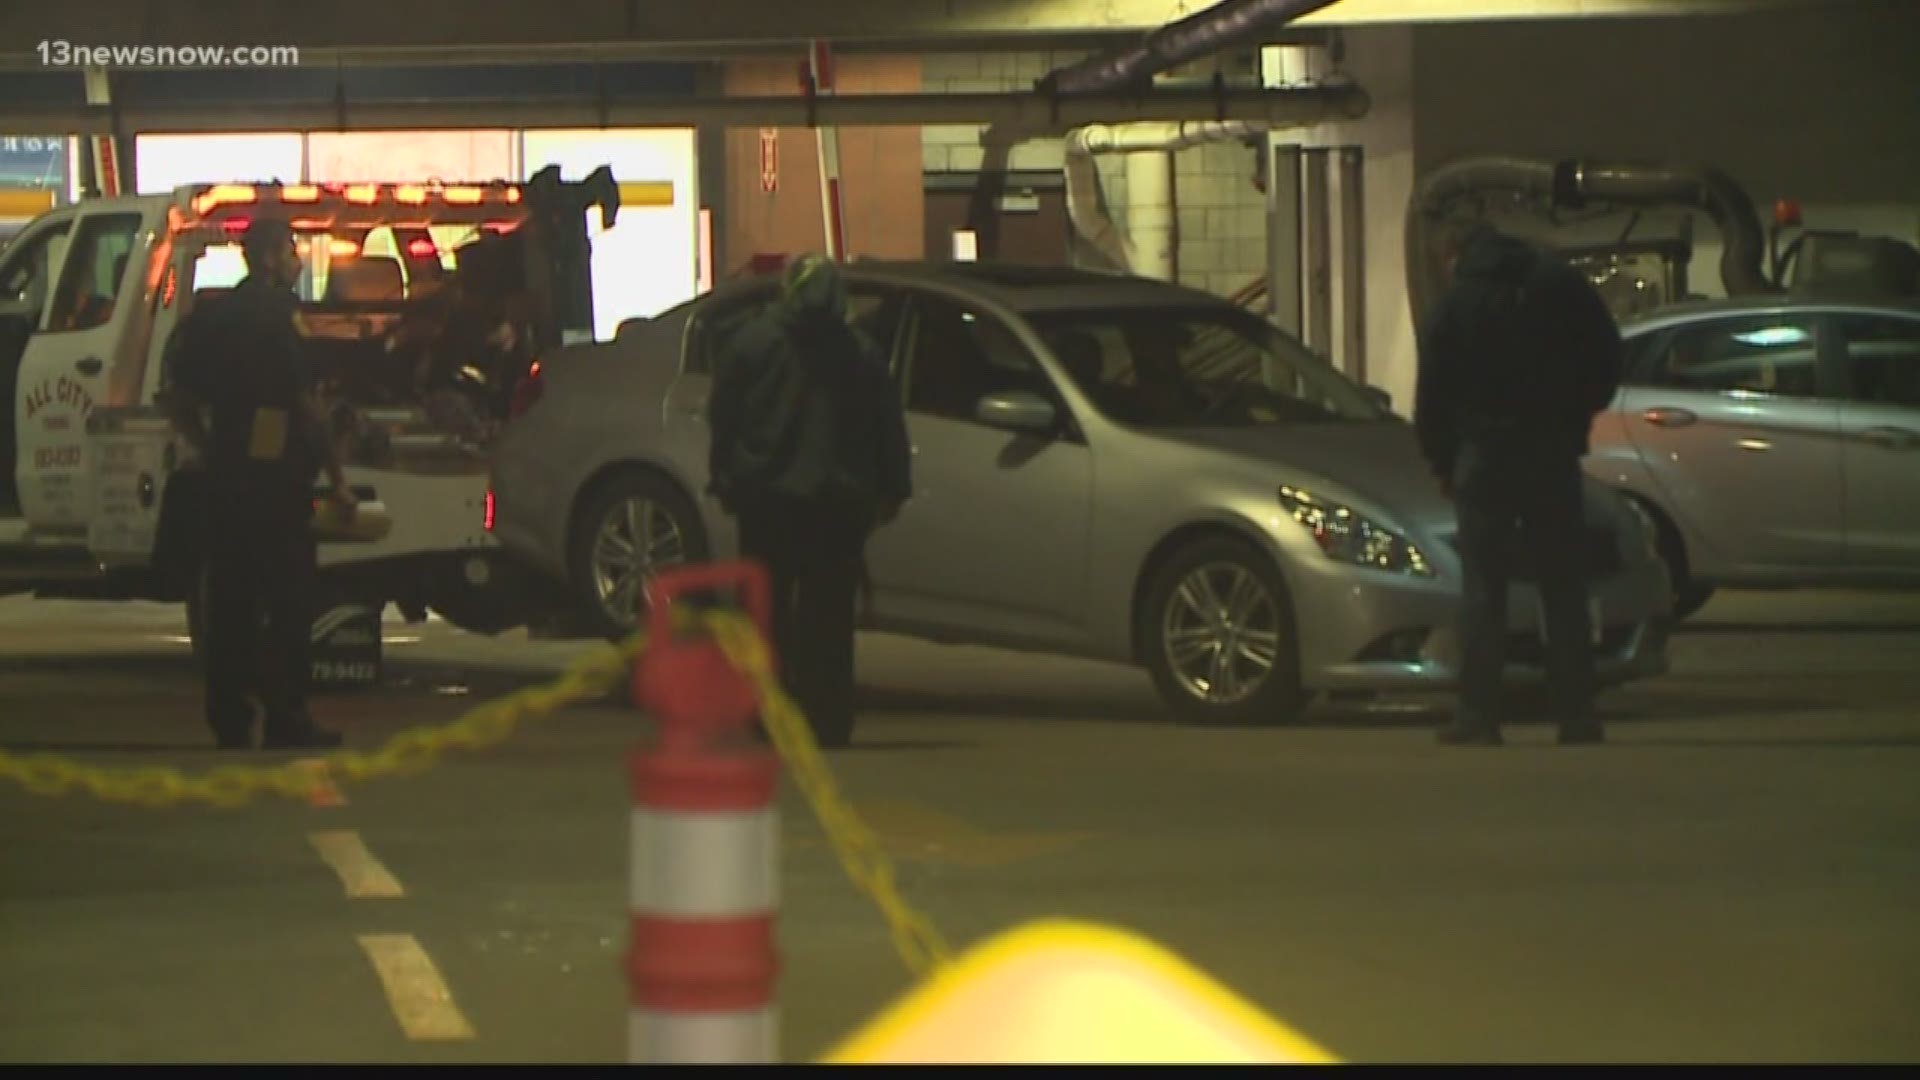 A police officer in Norfolk returned fire at the York Street parking garage.